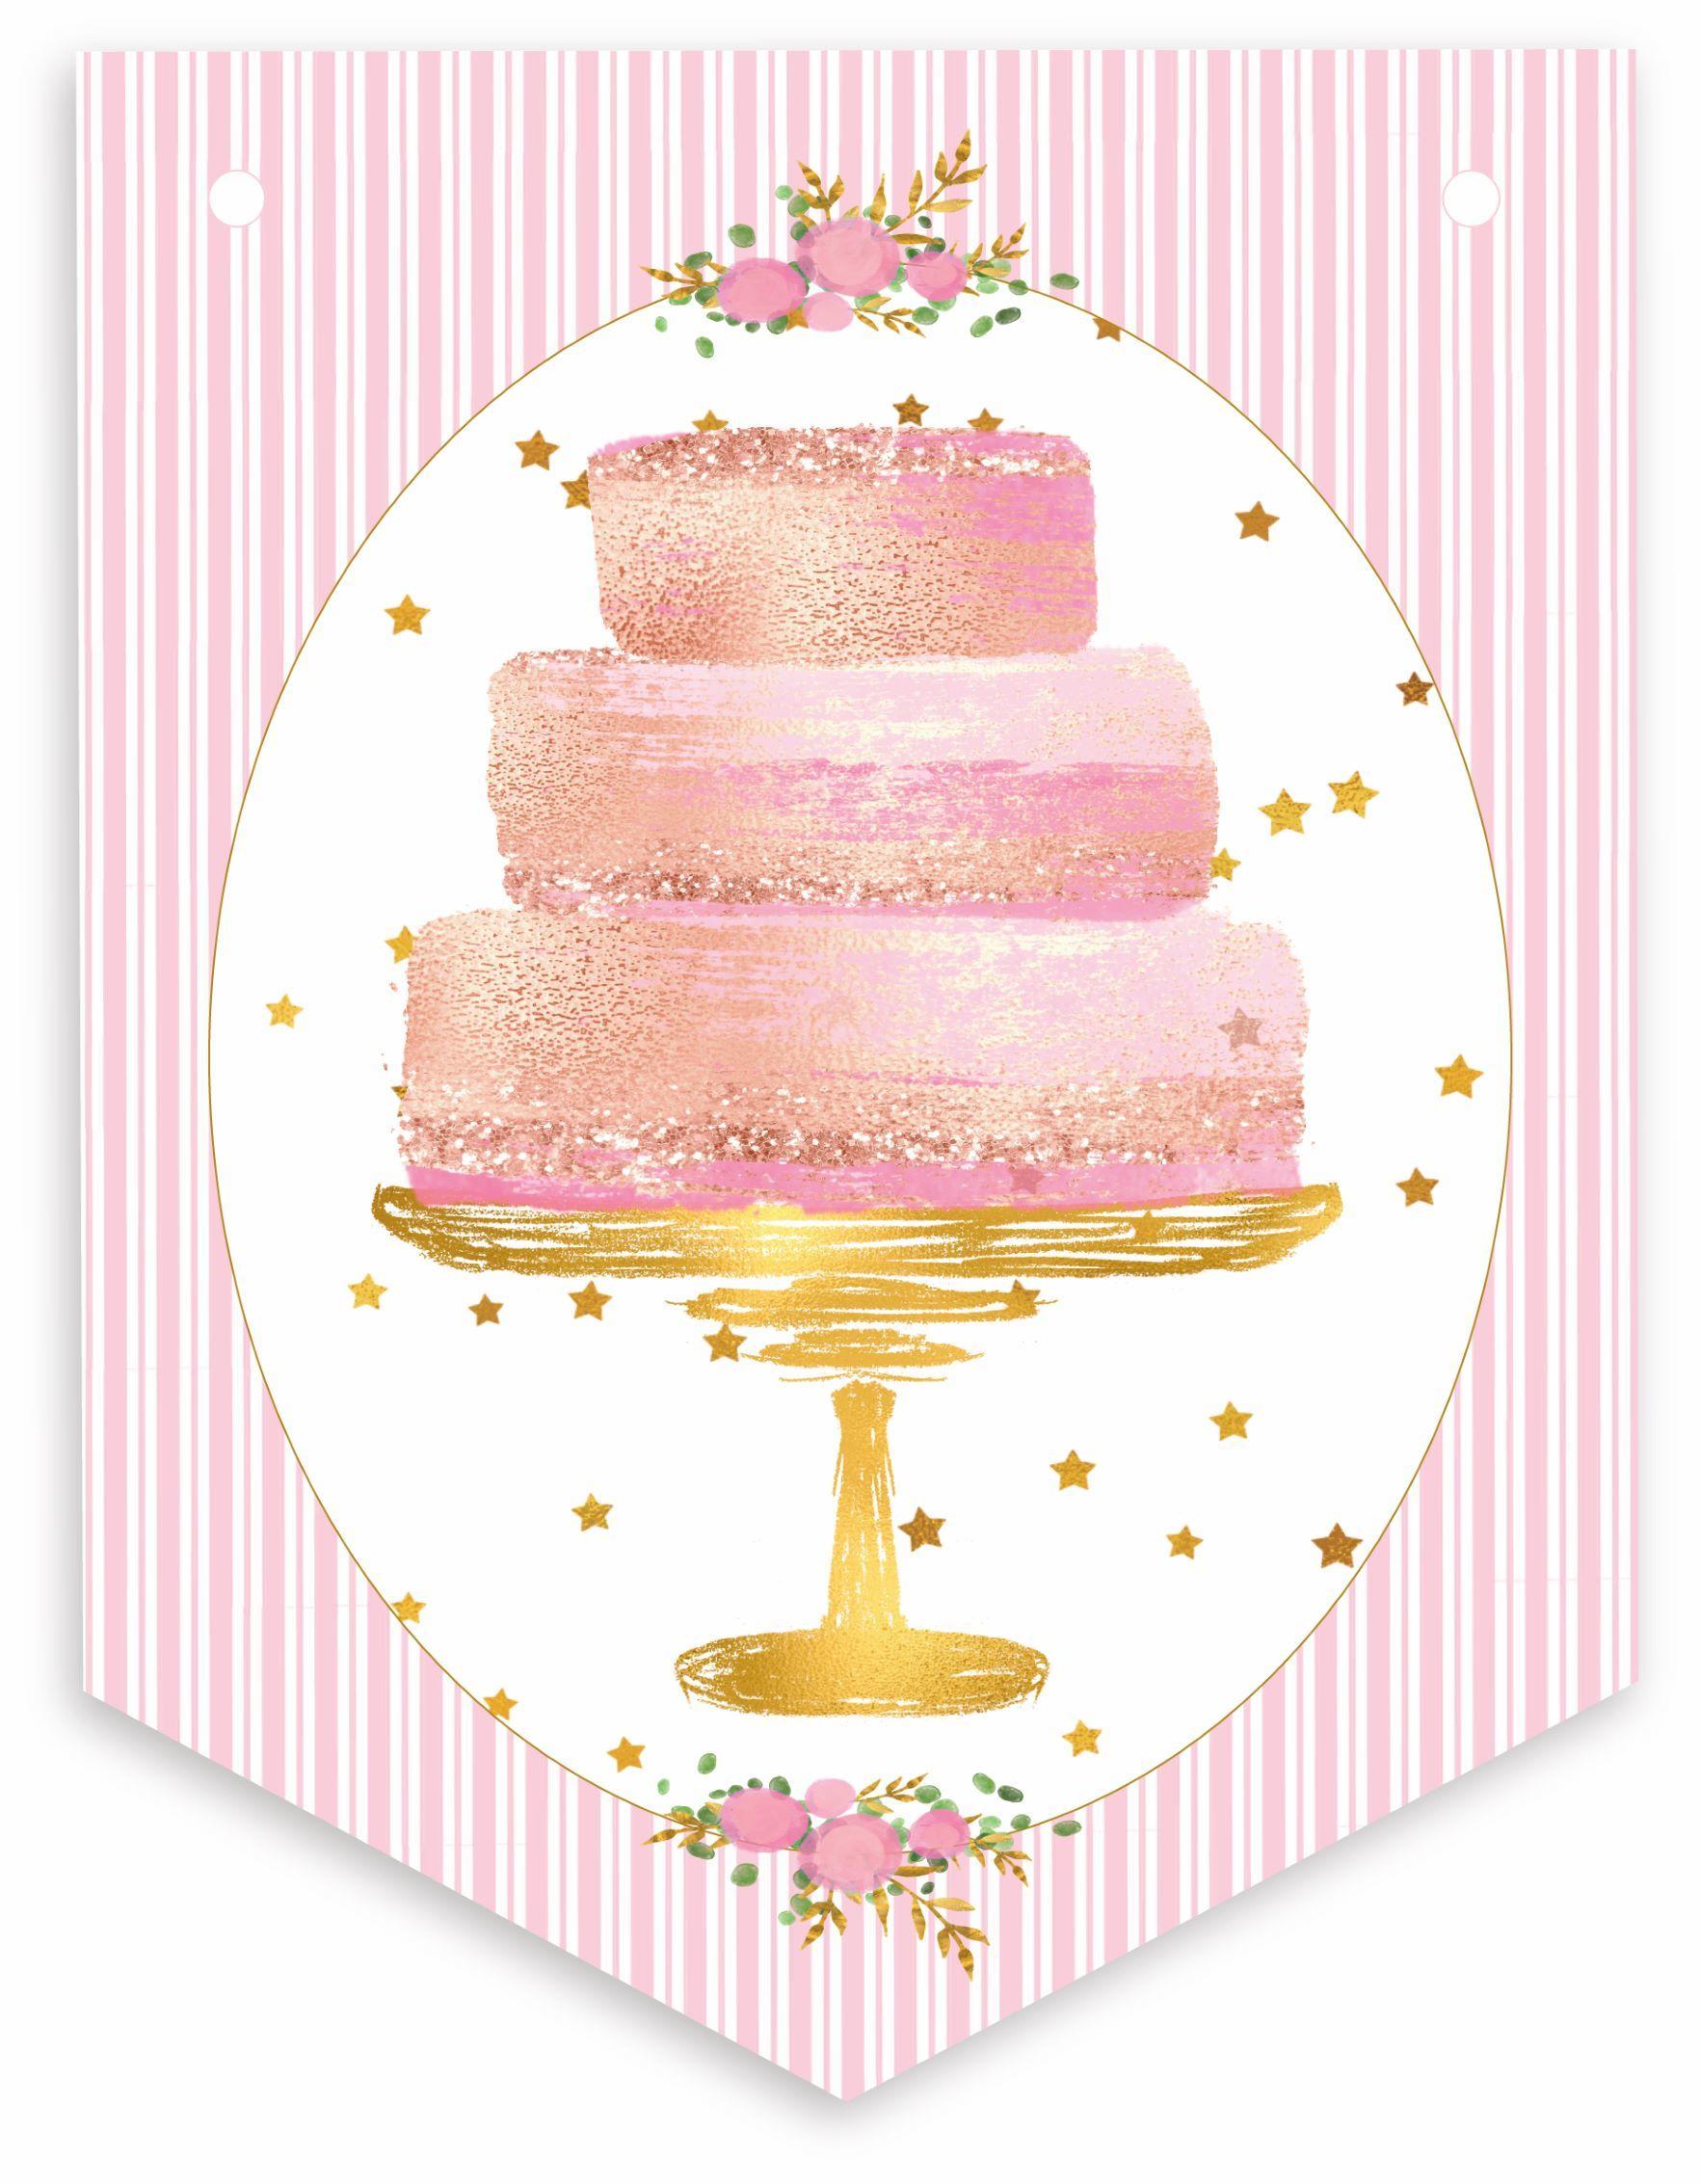 Posh Cakes Bunting,Wedding Cakes Banner,Birthday Cakes,Celebration Cakes,Great Gift for Baker